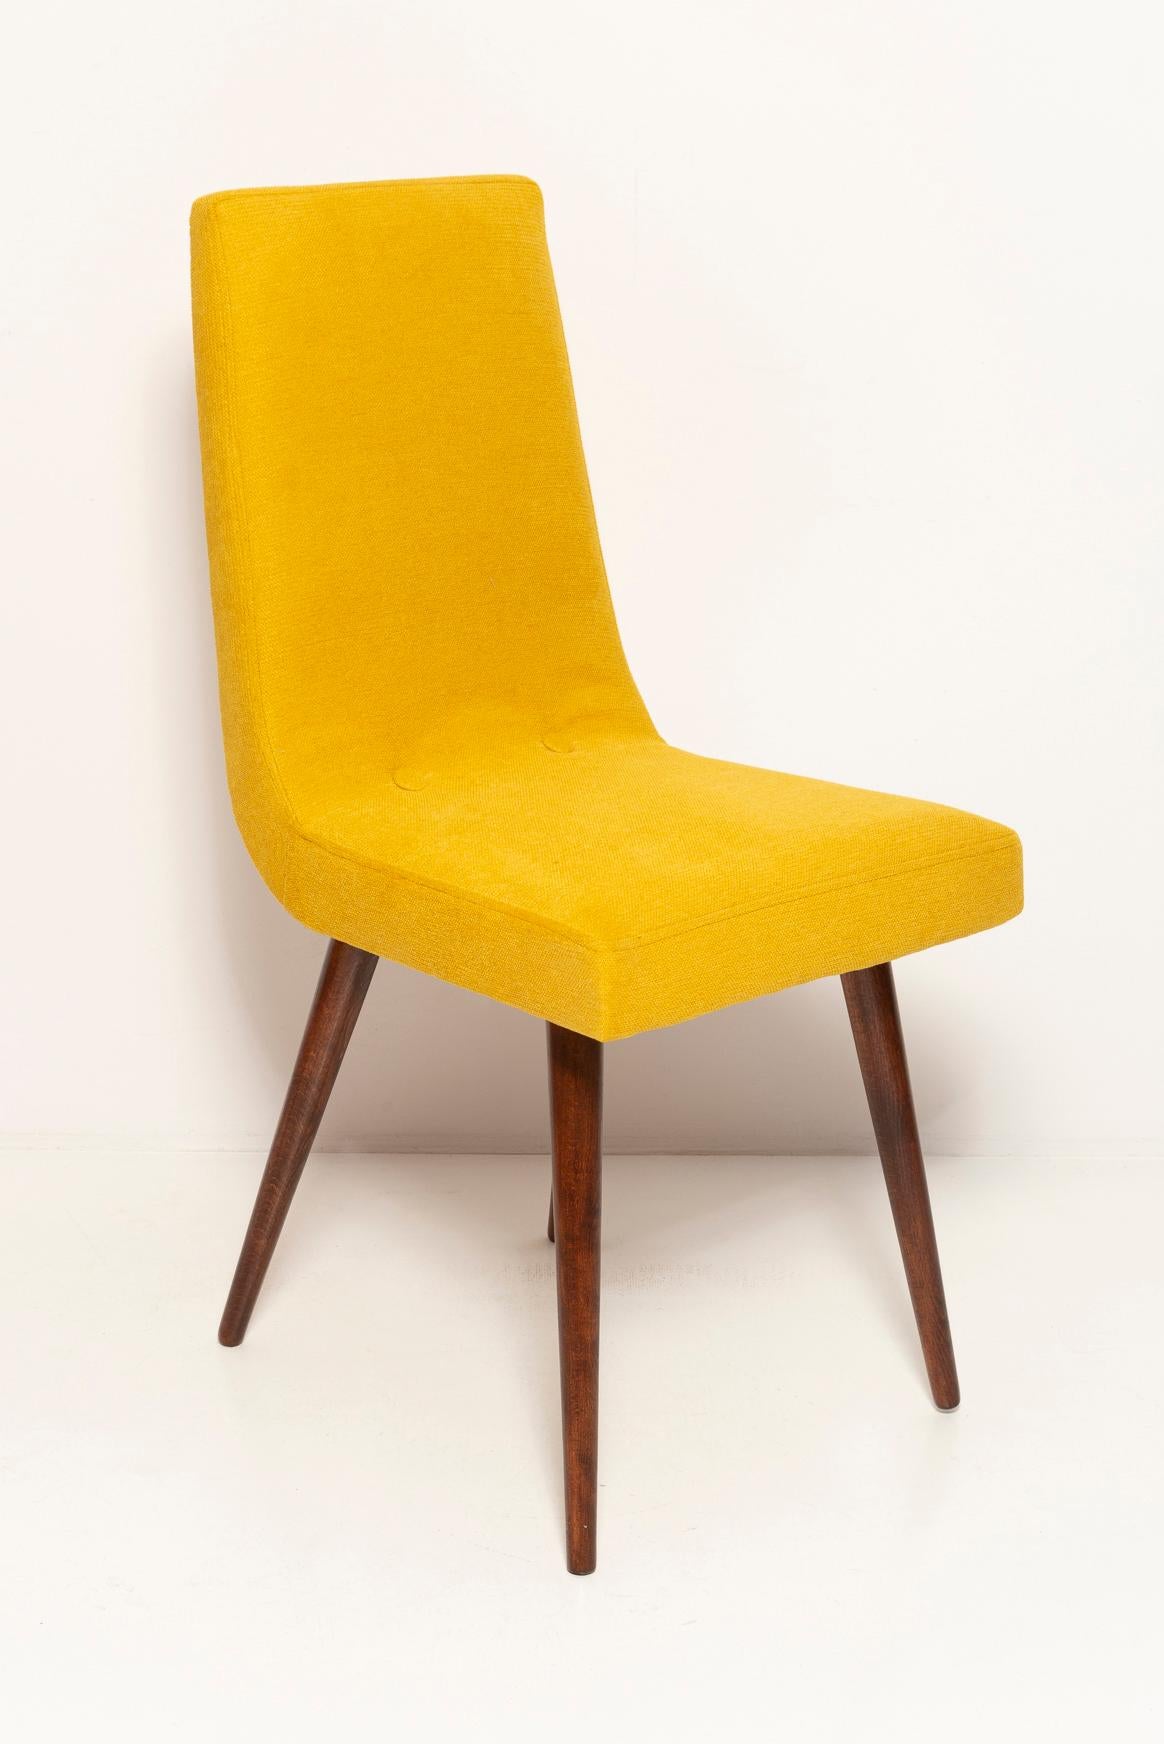 20th Century Set of Ten Midcentury Mustard Yellow Wool Chairs, Rajmund Halas Europe, 1960s For Sale